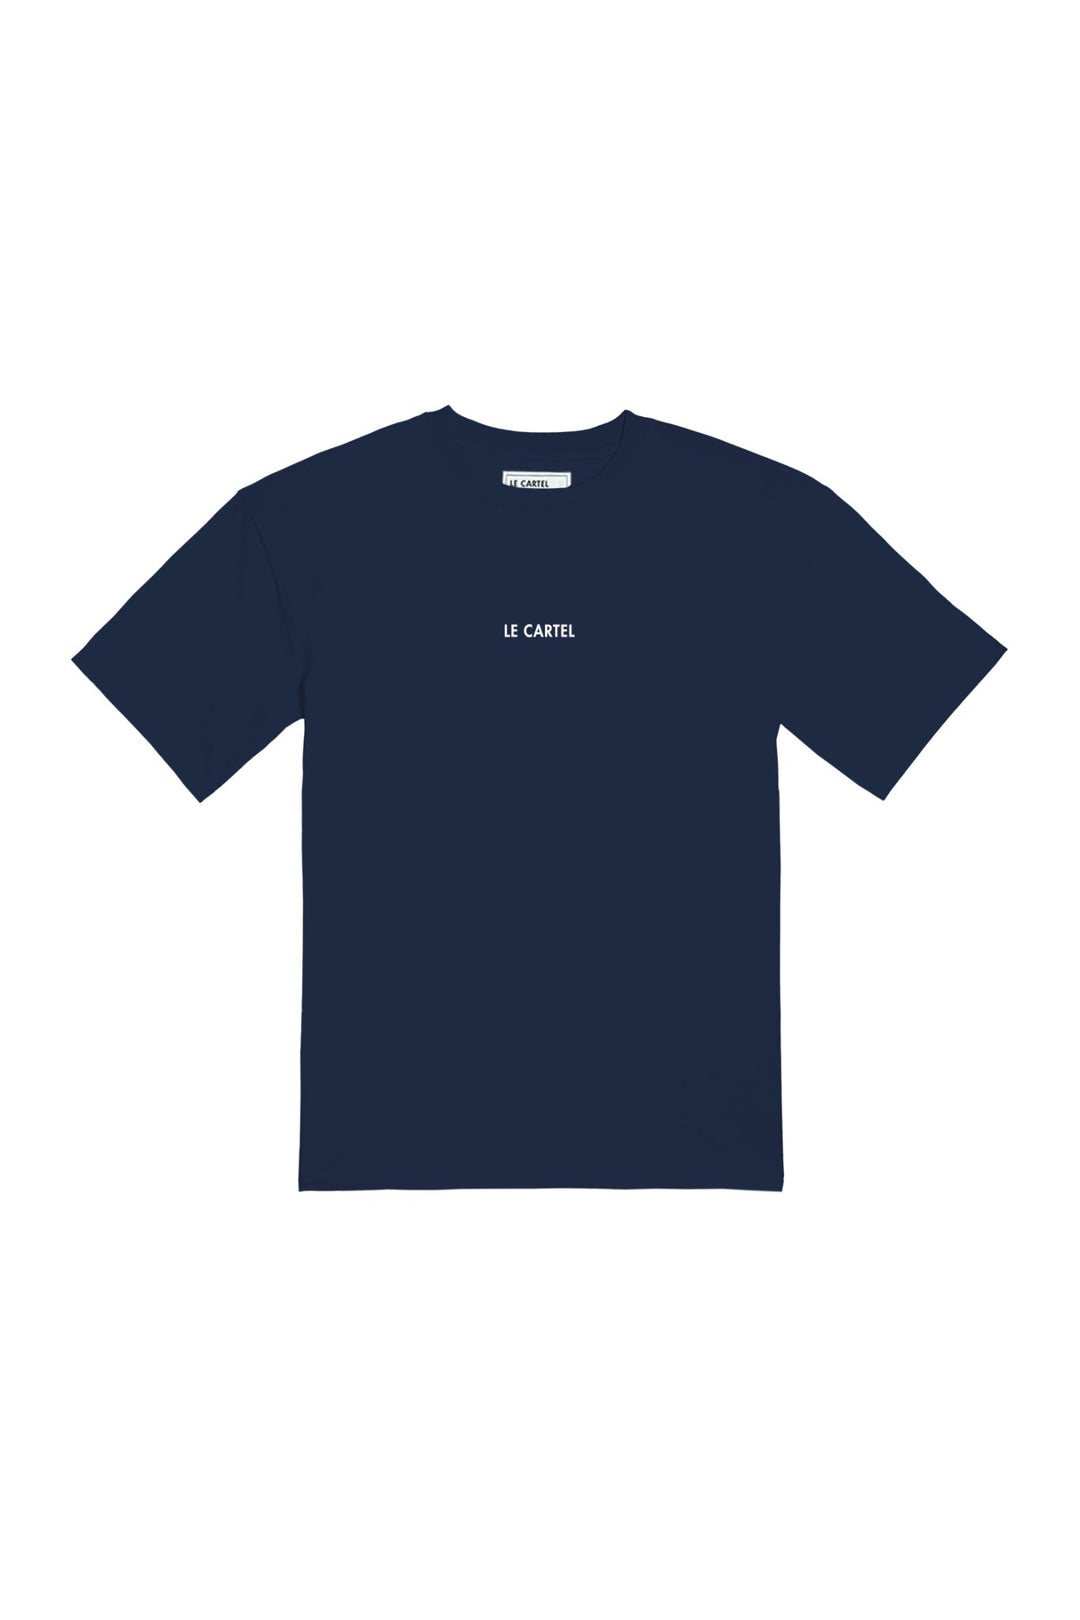 GUS EIFFEL・T-shirt unisexe・Bleu marine - Le Cartel